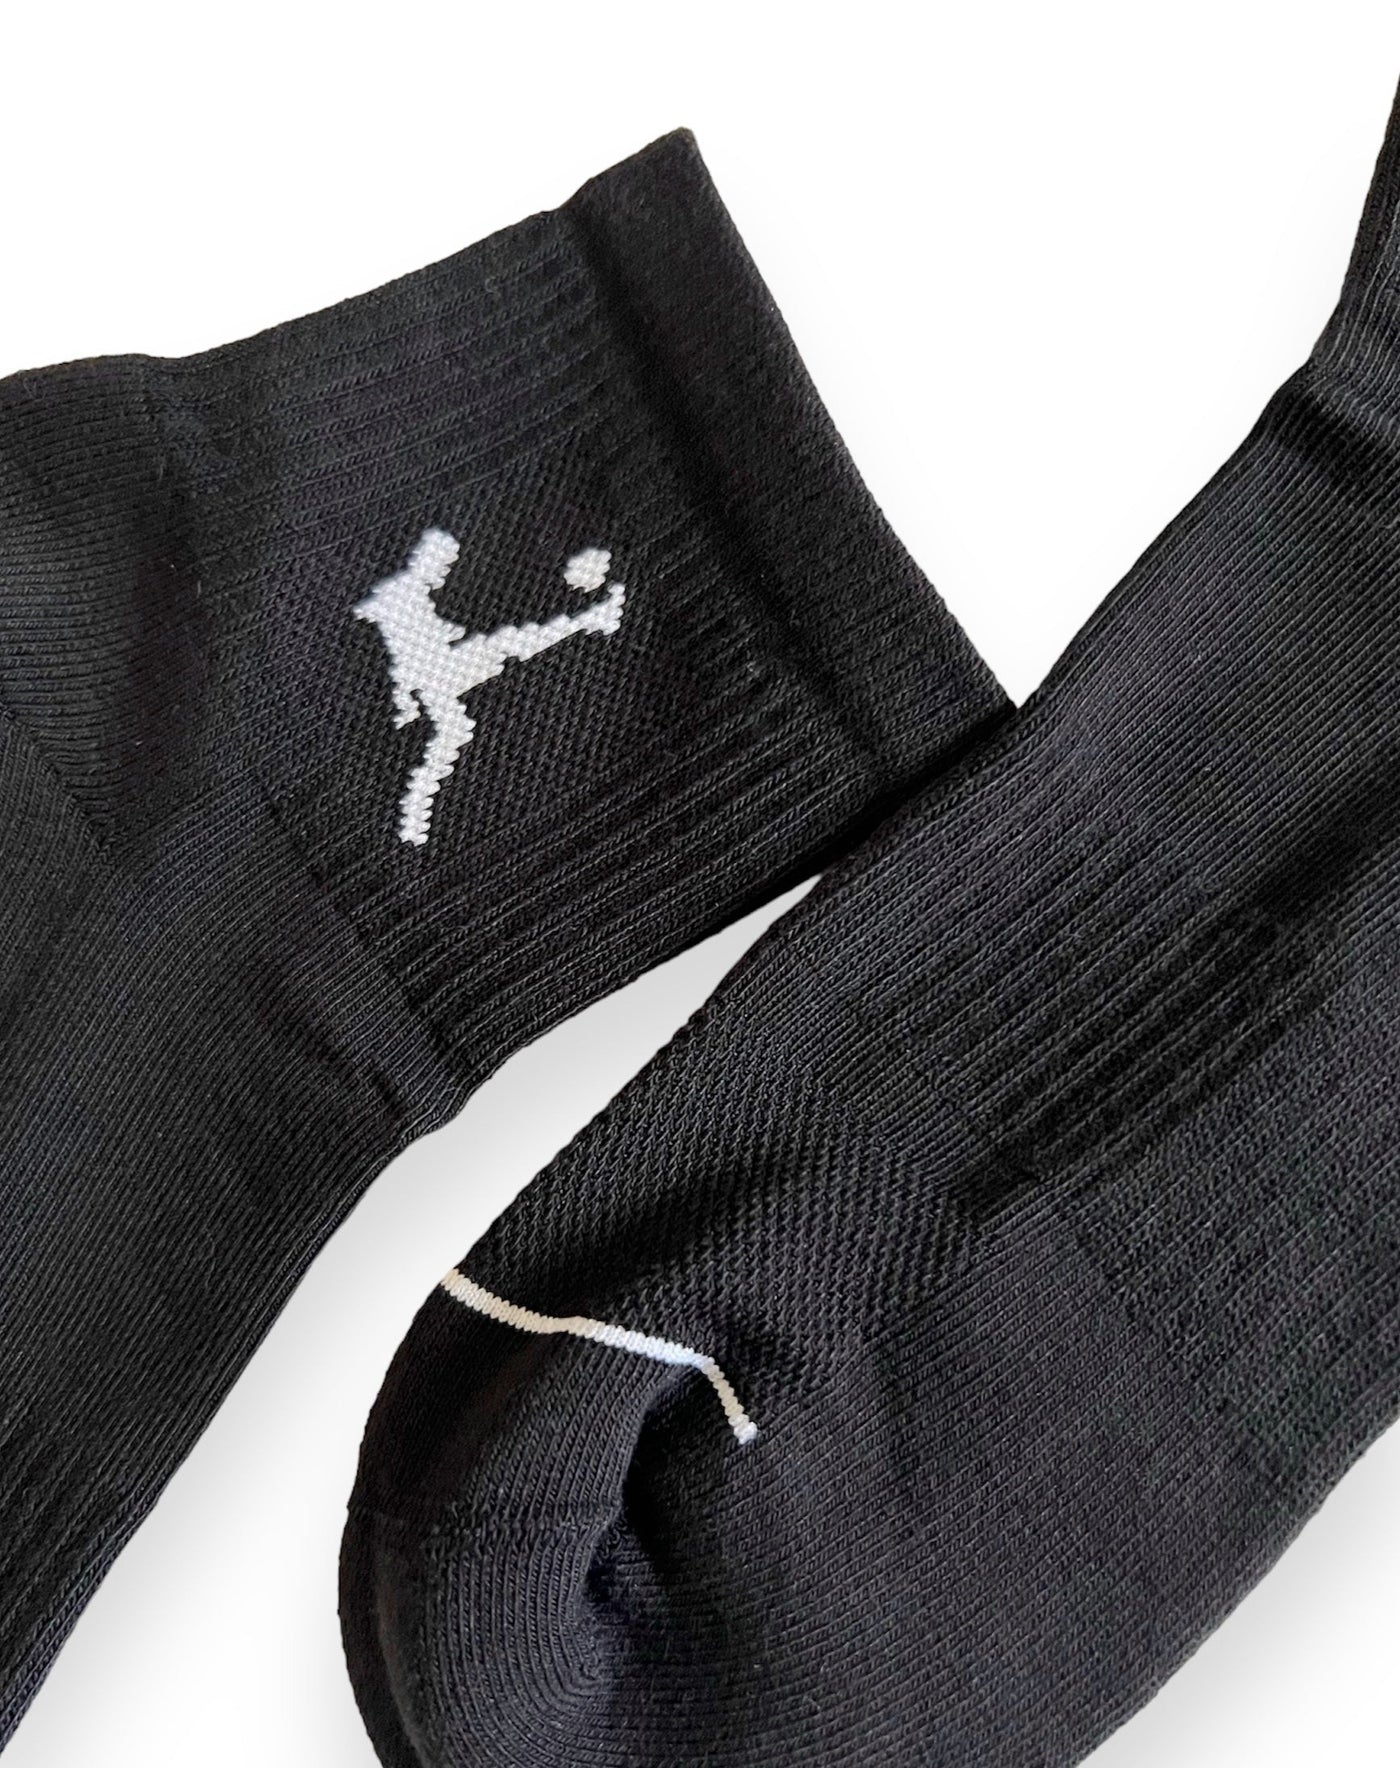 High Quality Black Socks - PROBOXS